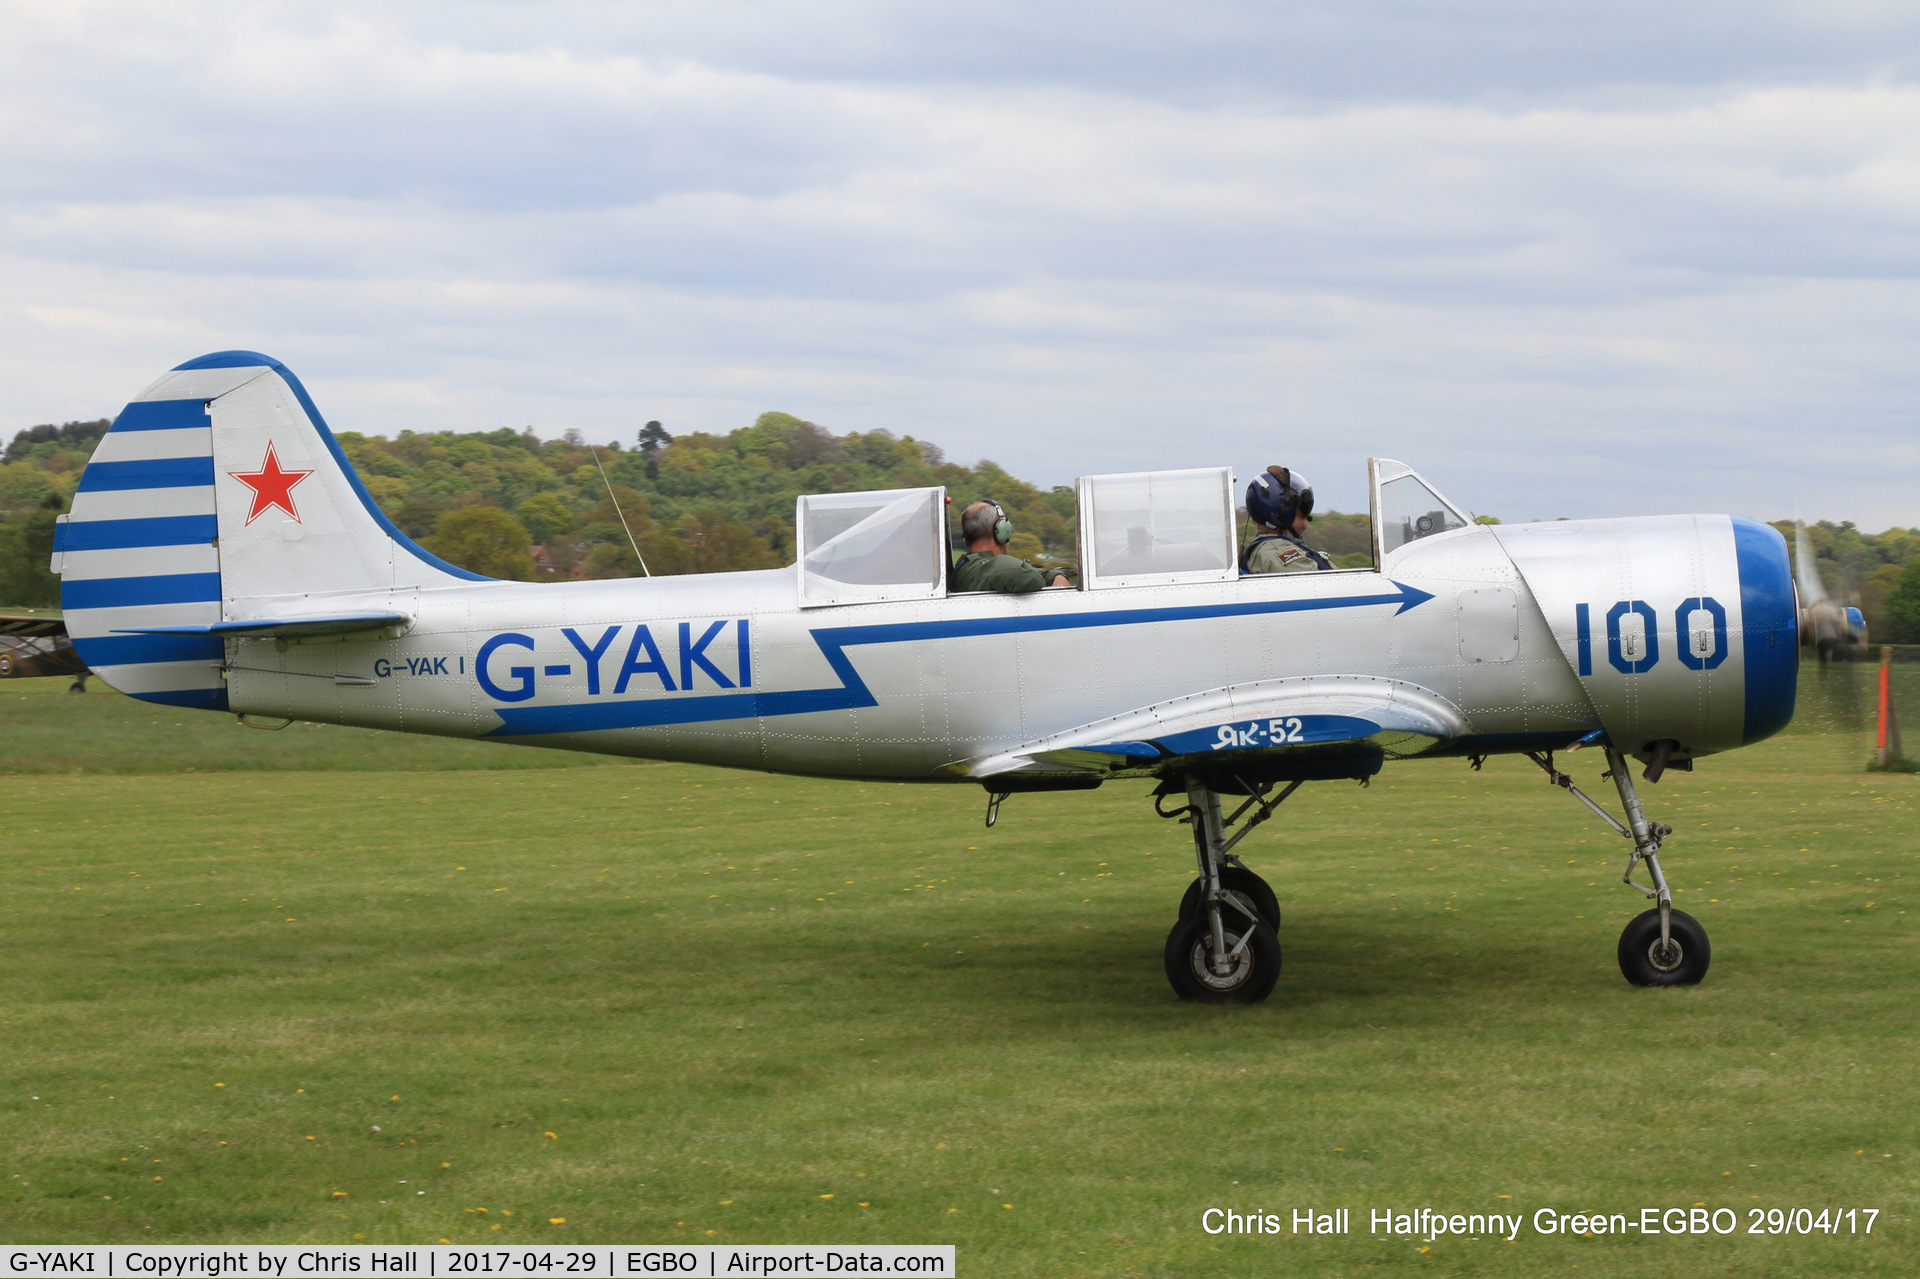 G-YAKI, 1986 Bacau Yak-52 C/N 866904, at the Radial & Trainer fly-in